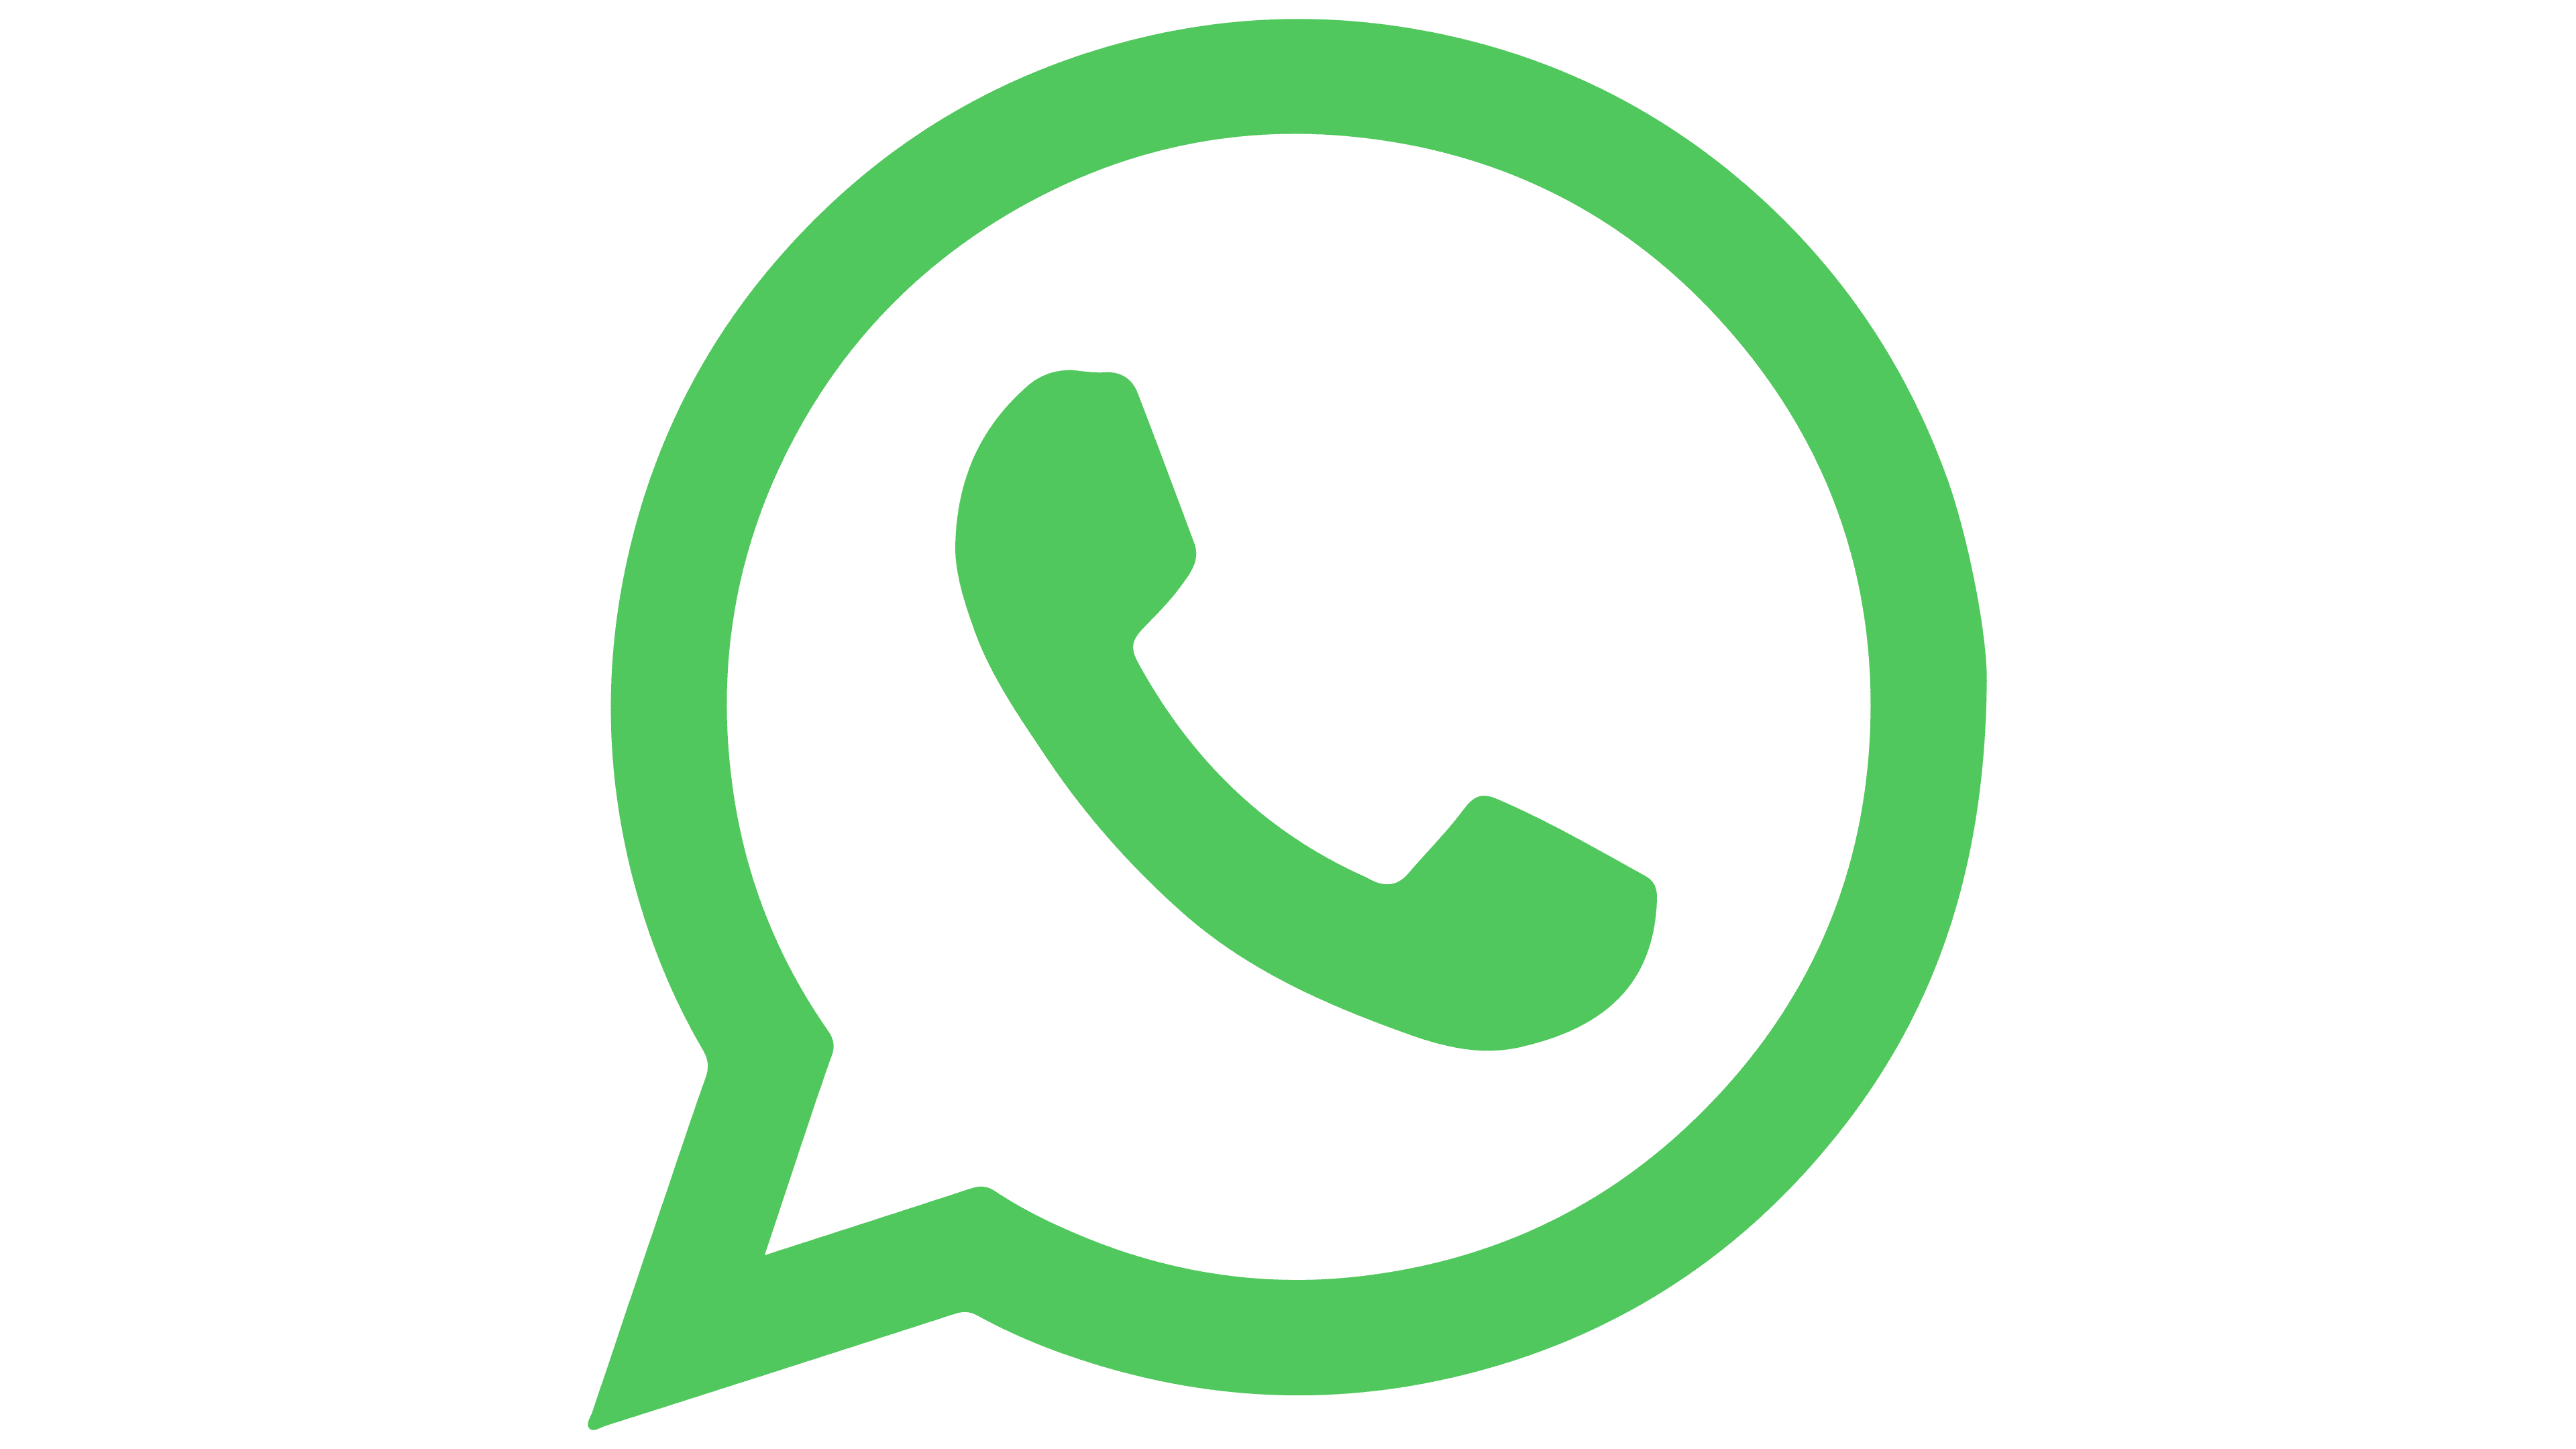 Logo of WhatsApp